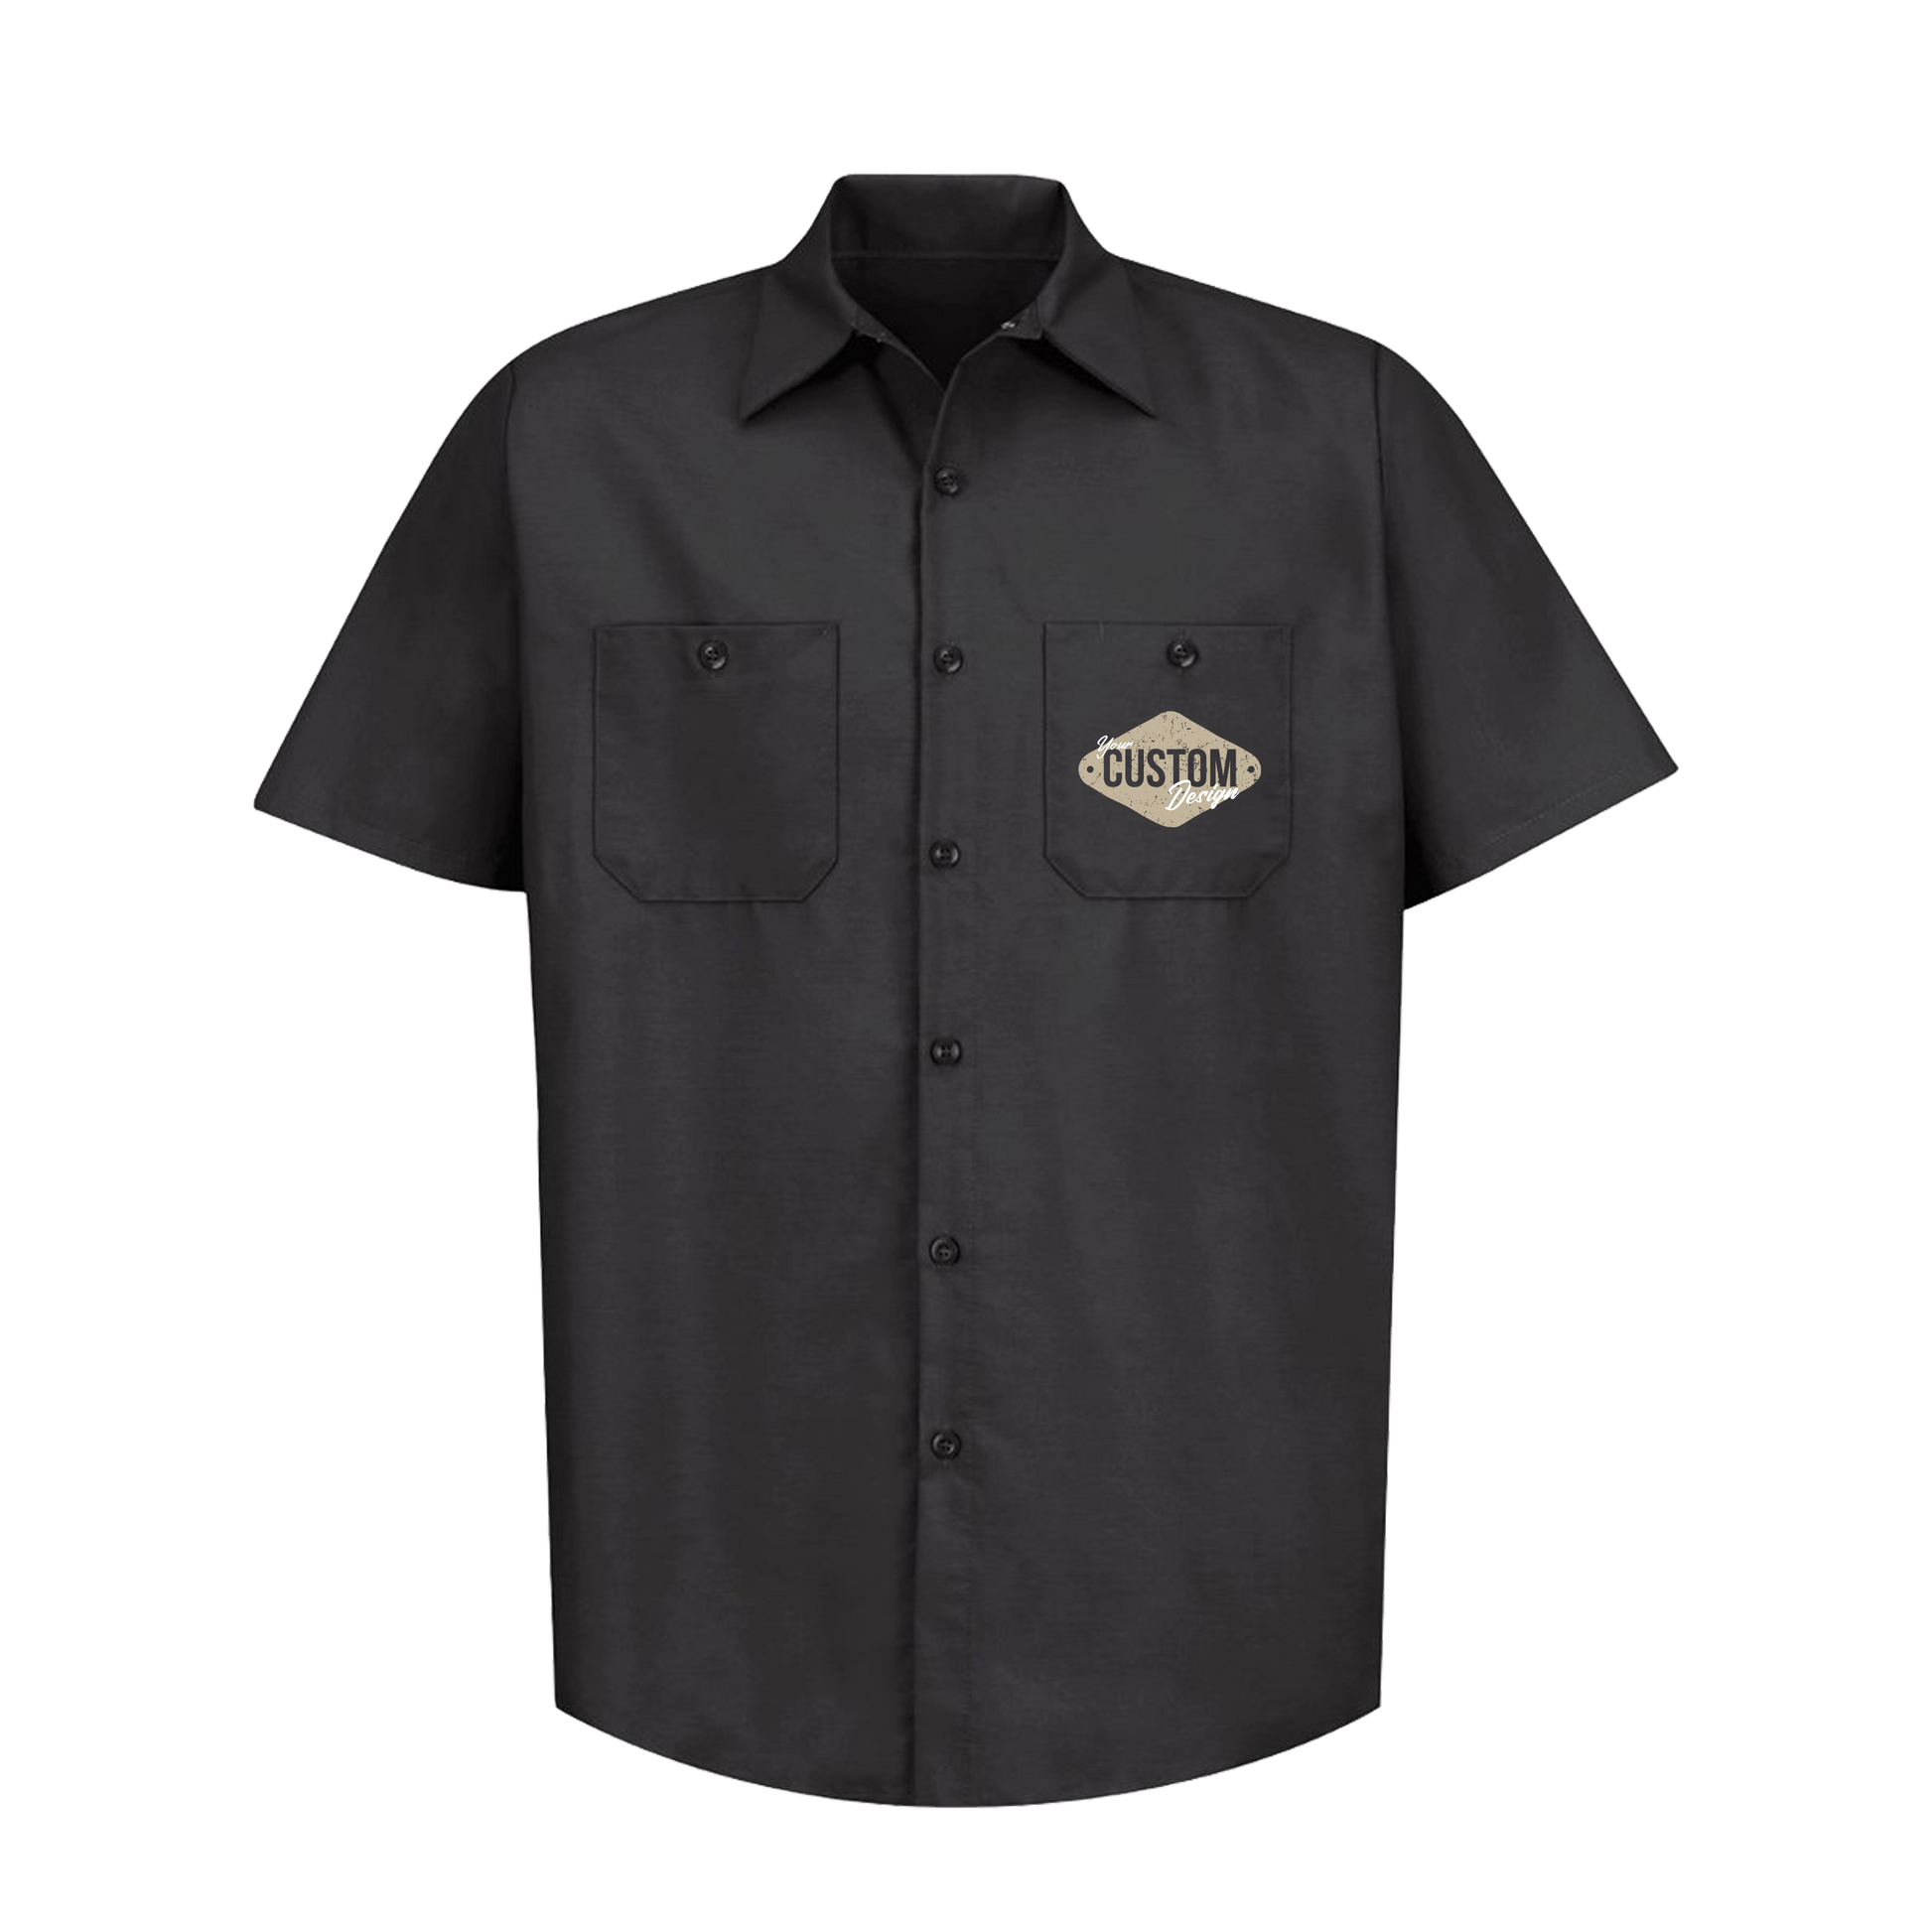 Custom Work Shirt by TshirtByDesign